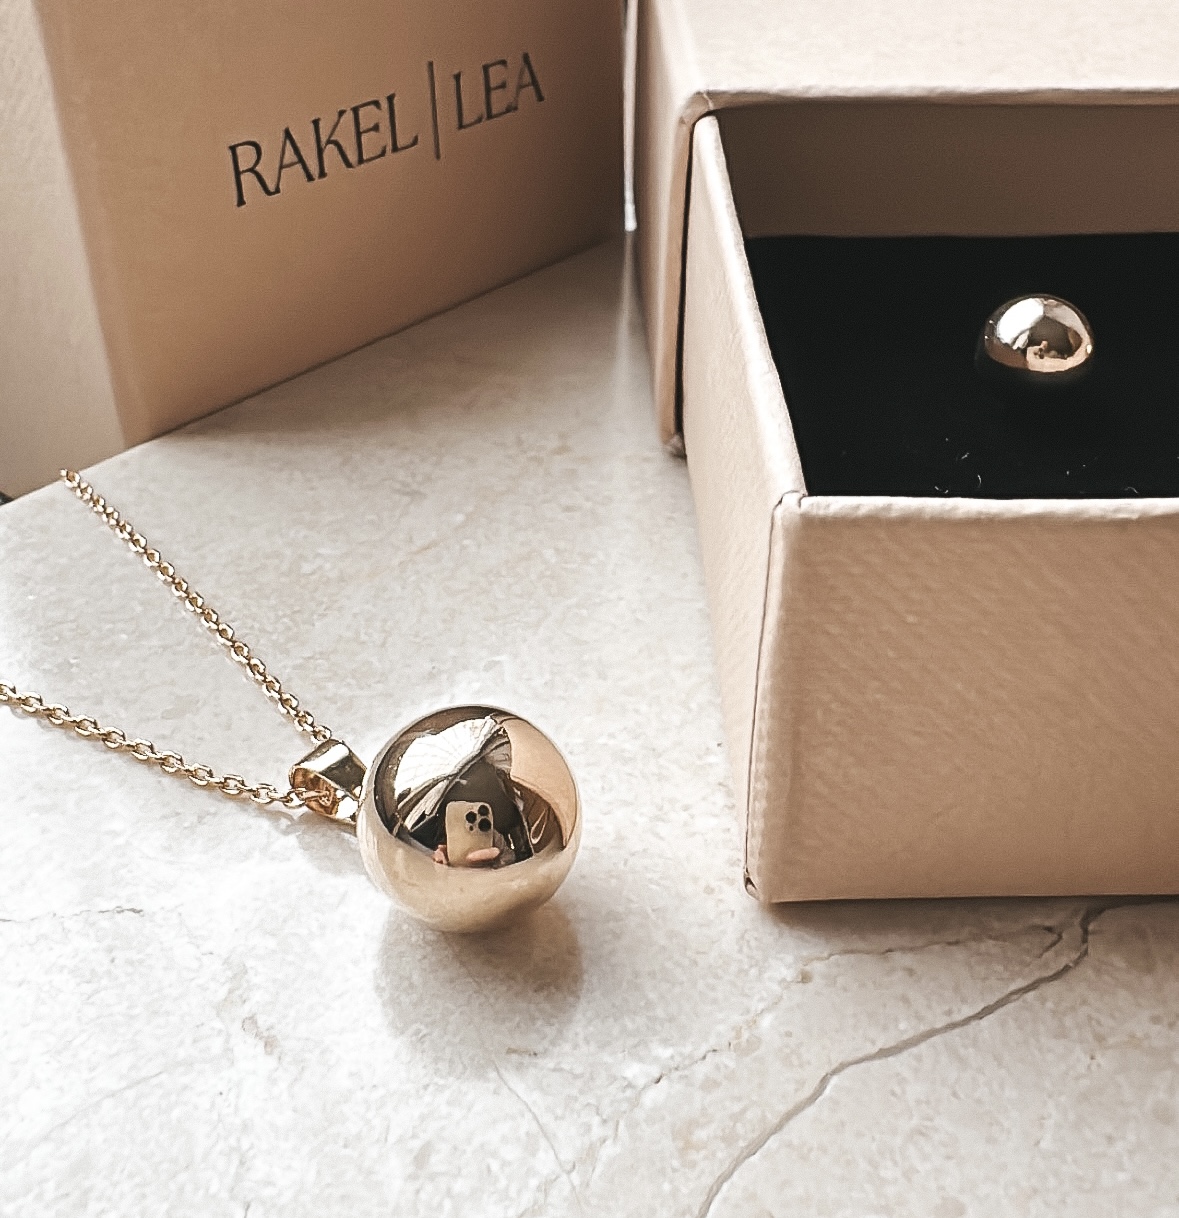 Golden Globe Necklace